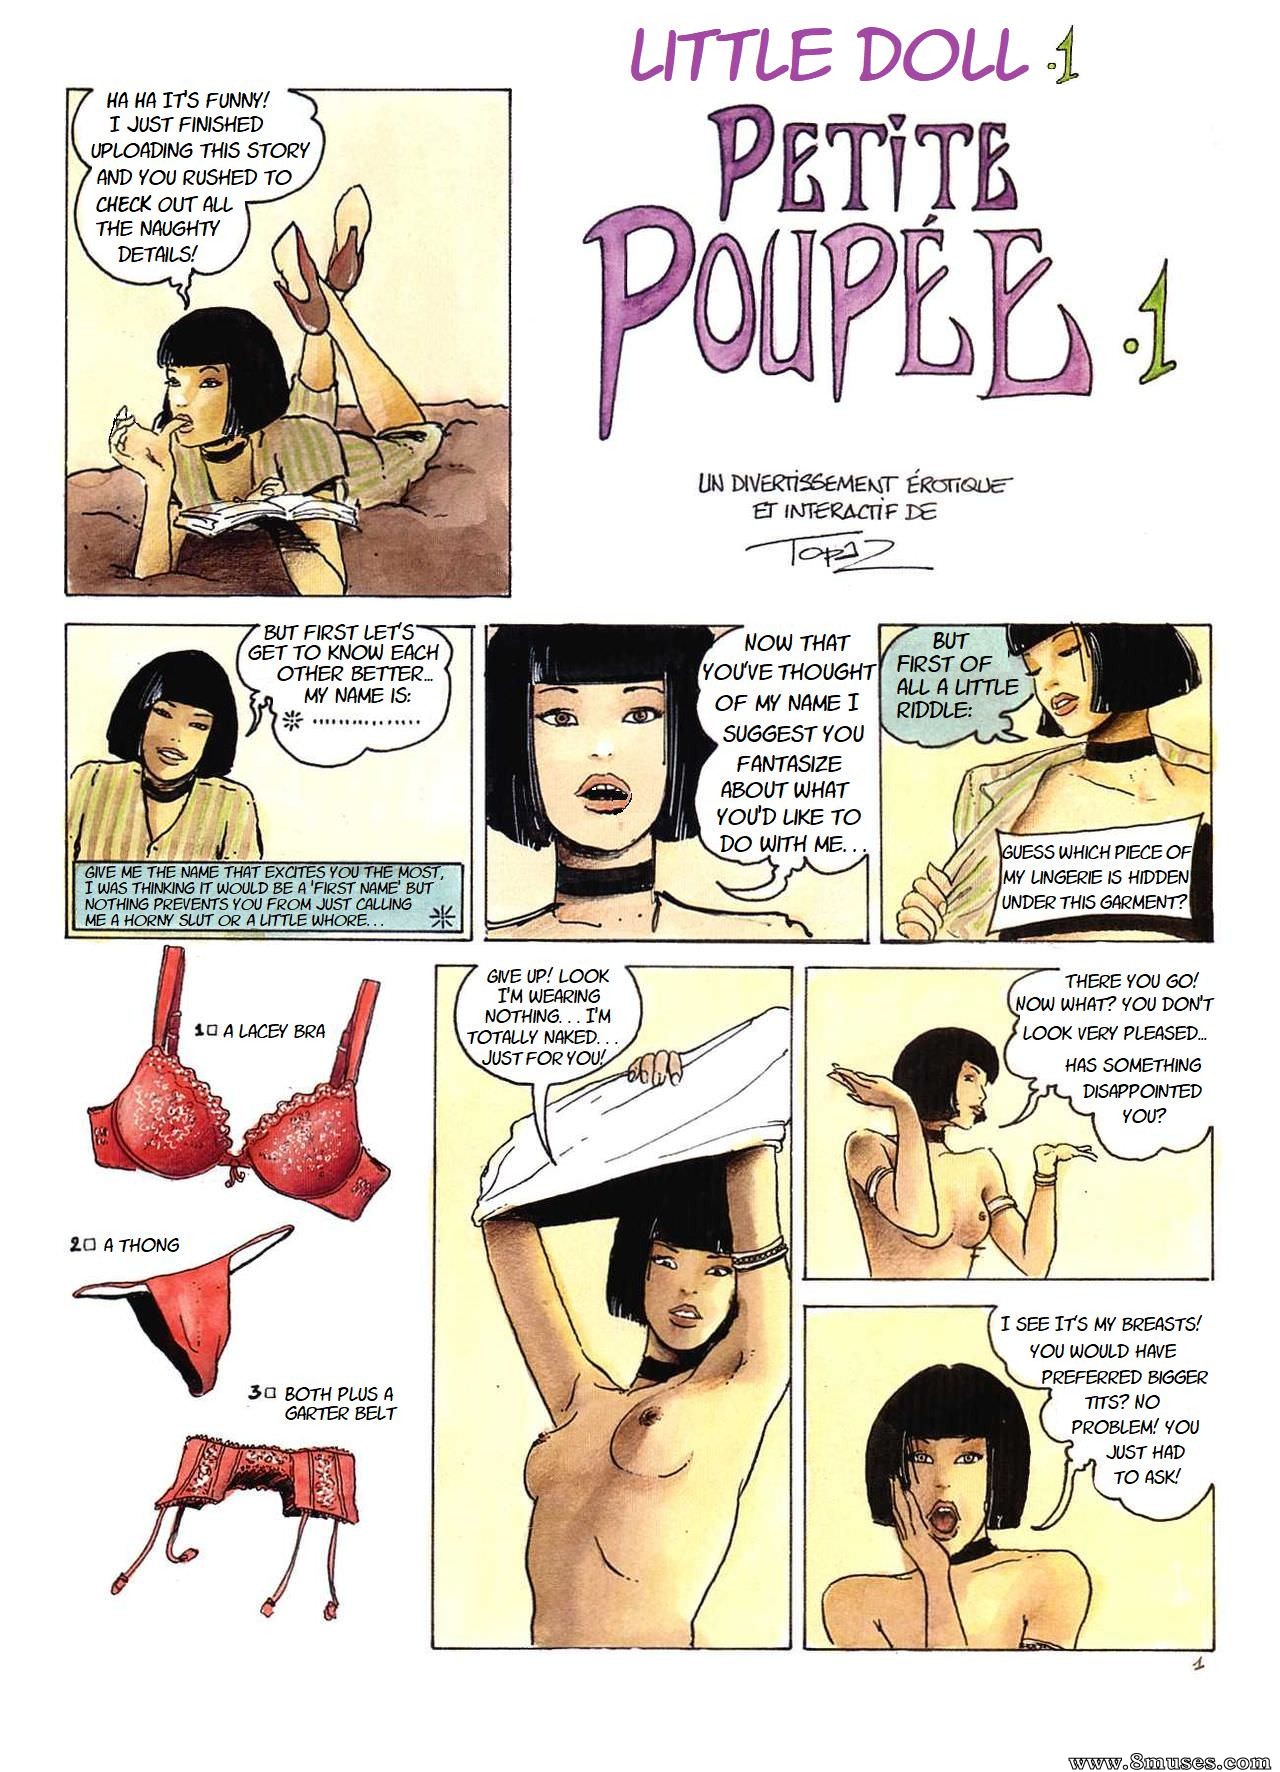 Petite Sex Comics - Little Doll - Petite Poupee Issue 1 - 8muses Comics - Sex Comics and Porn  Cartoons